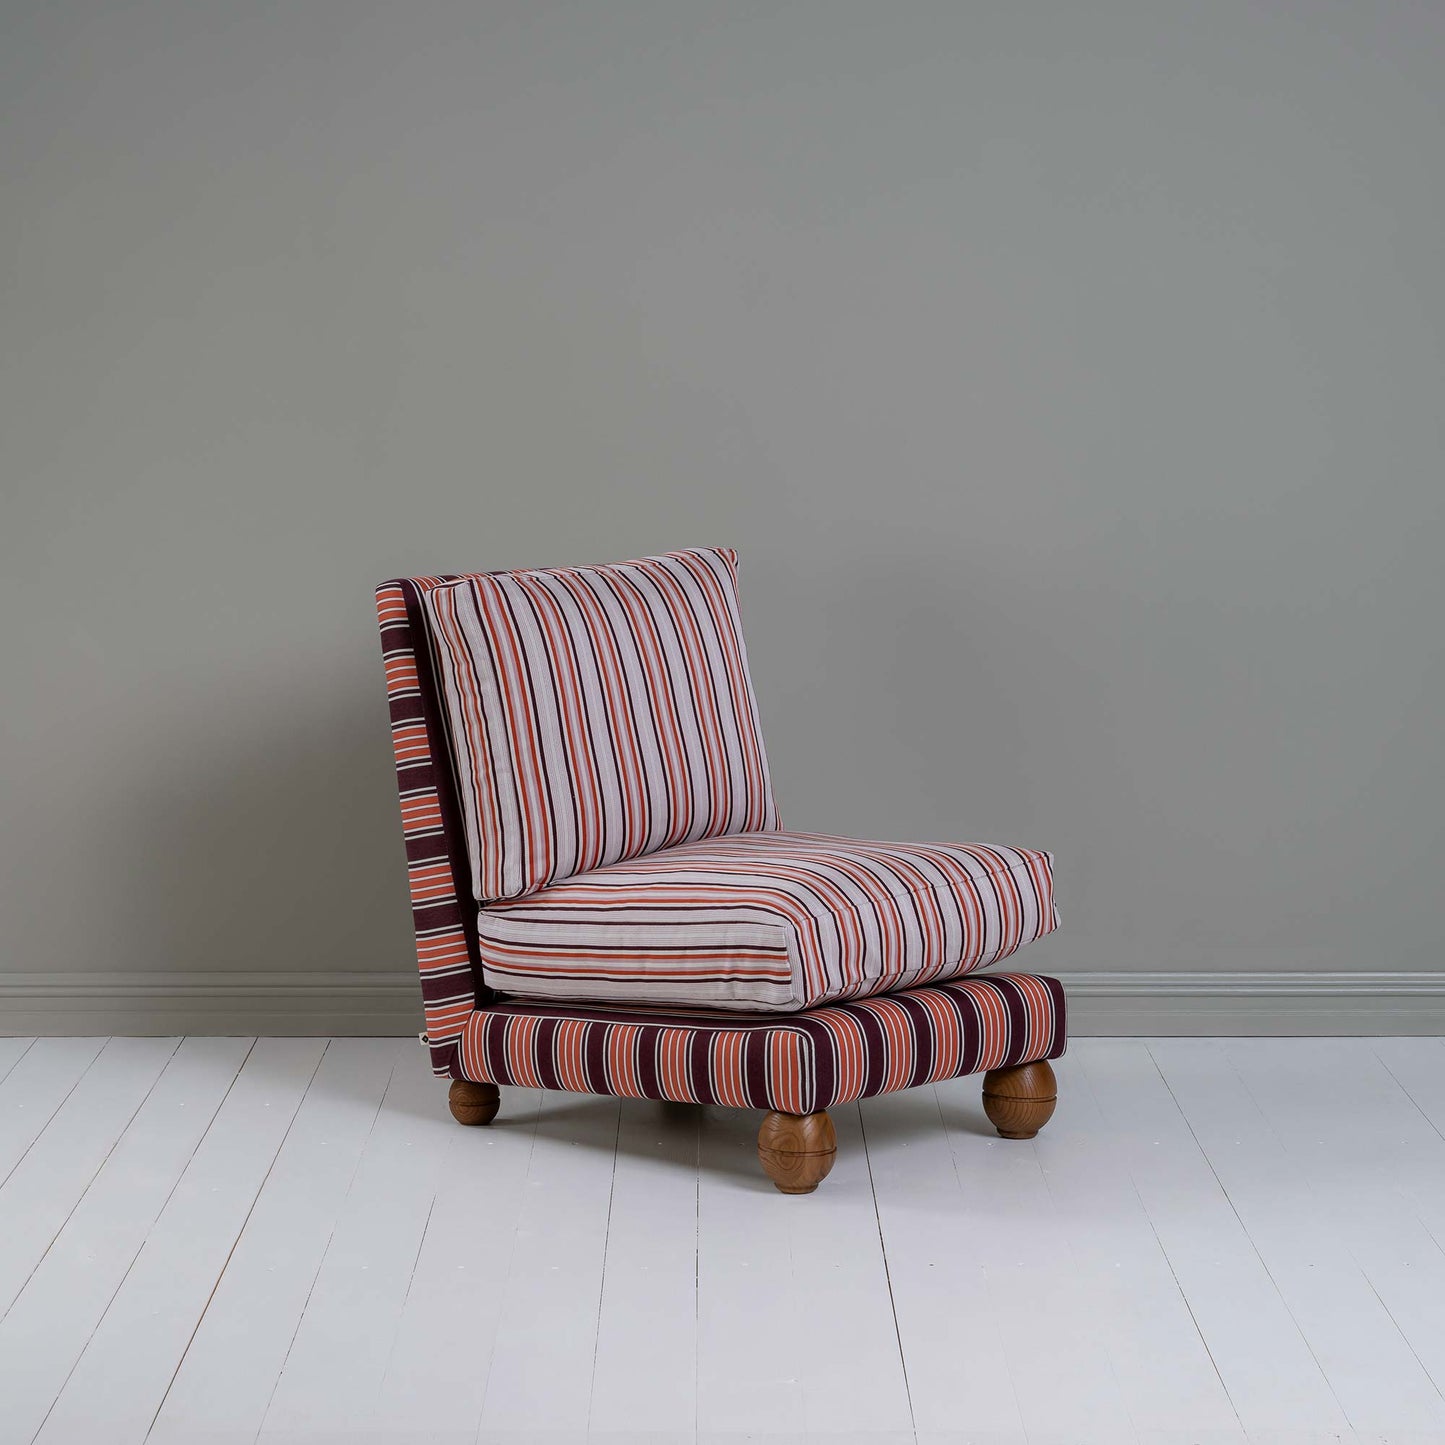 Perch Slipper Armchair in Regatta Cotton Flame Frame and Slow Lane Cotton Linen Berry Seat